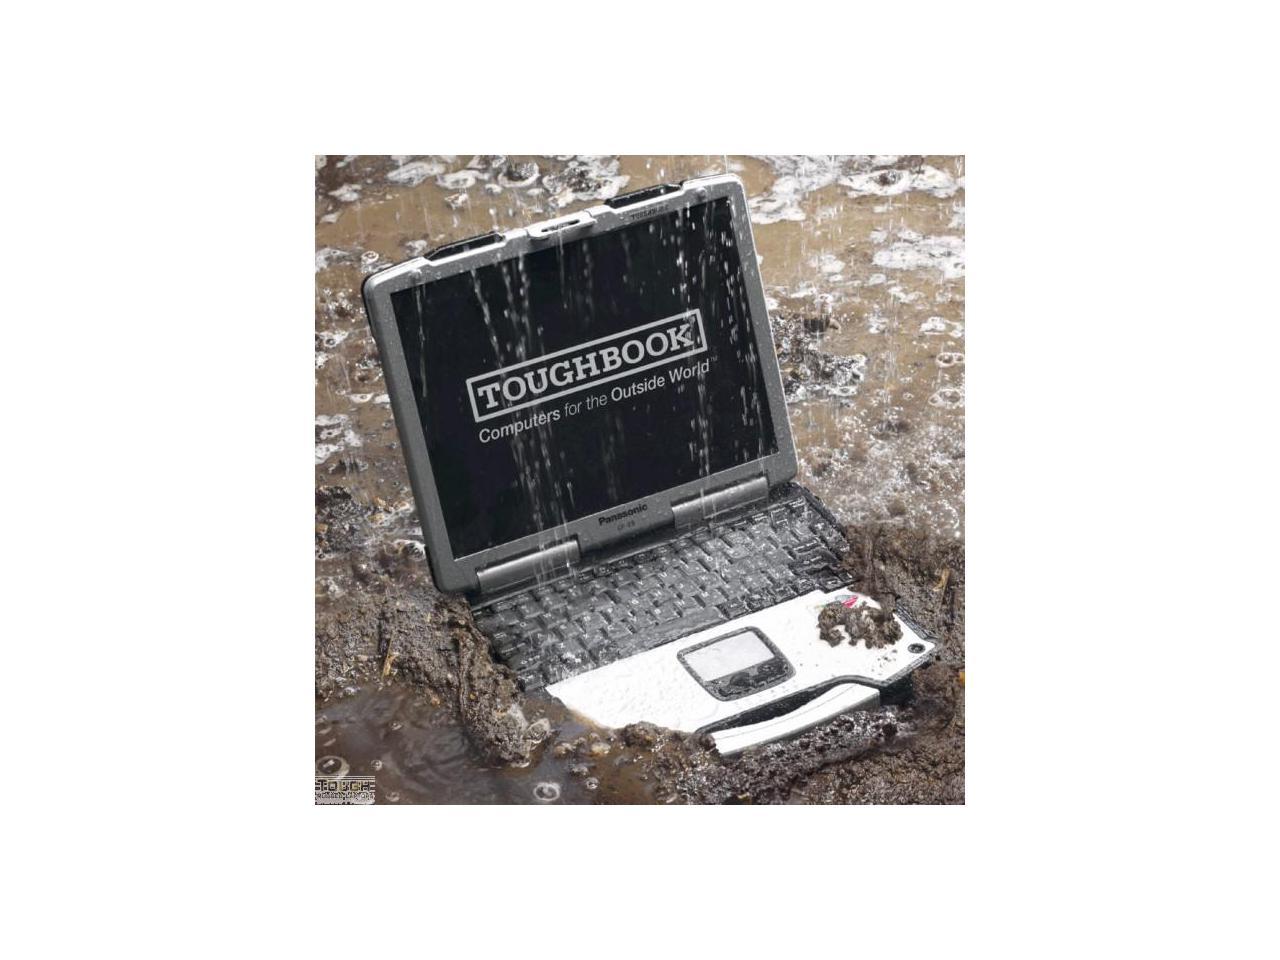 Panasonic Toughbook CF-31 MK4, Grade B, Intel Core i5-3340M @ 2.70GHz, NON-TOUCH, 8GB, 240GB SSD, GOBI5000 4G, Webcam, Backlit Keyboard, Win10 Pro & charger